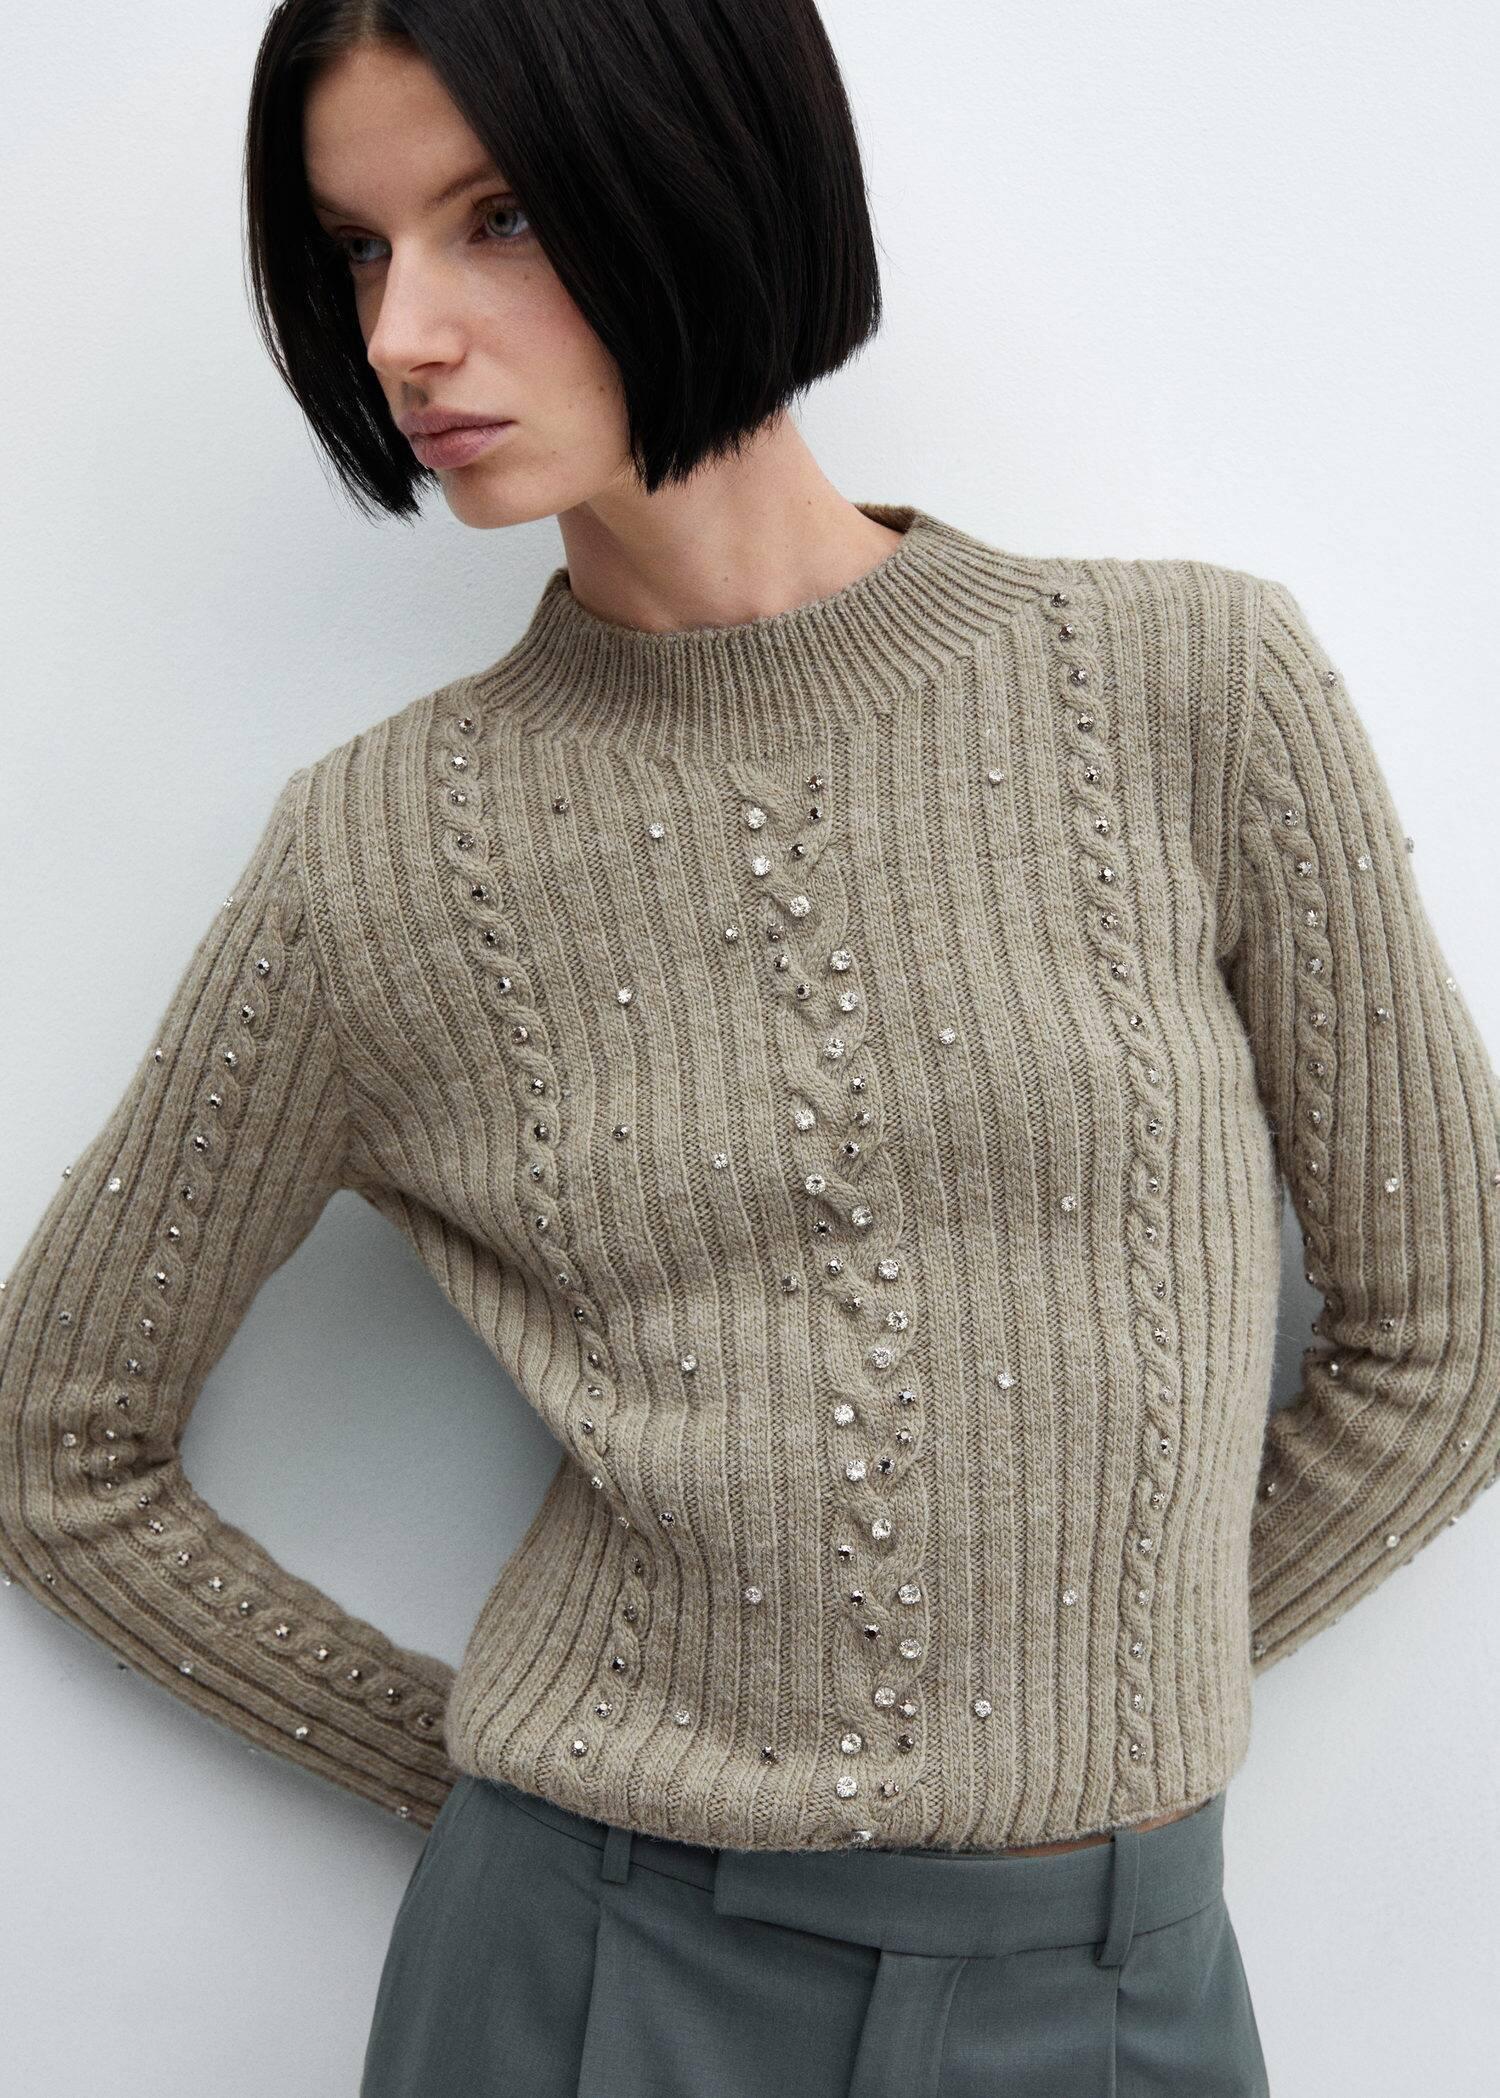 Mango - Beige Rhinestone Detail Ribbed Sweater